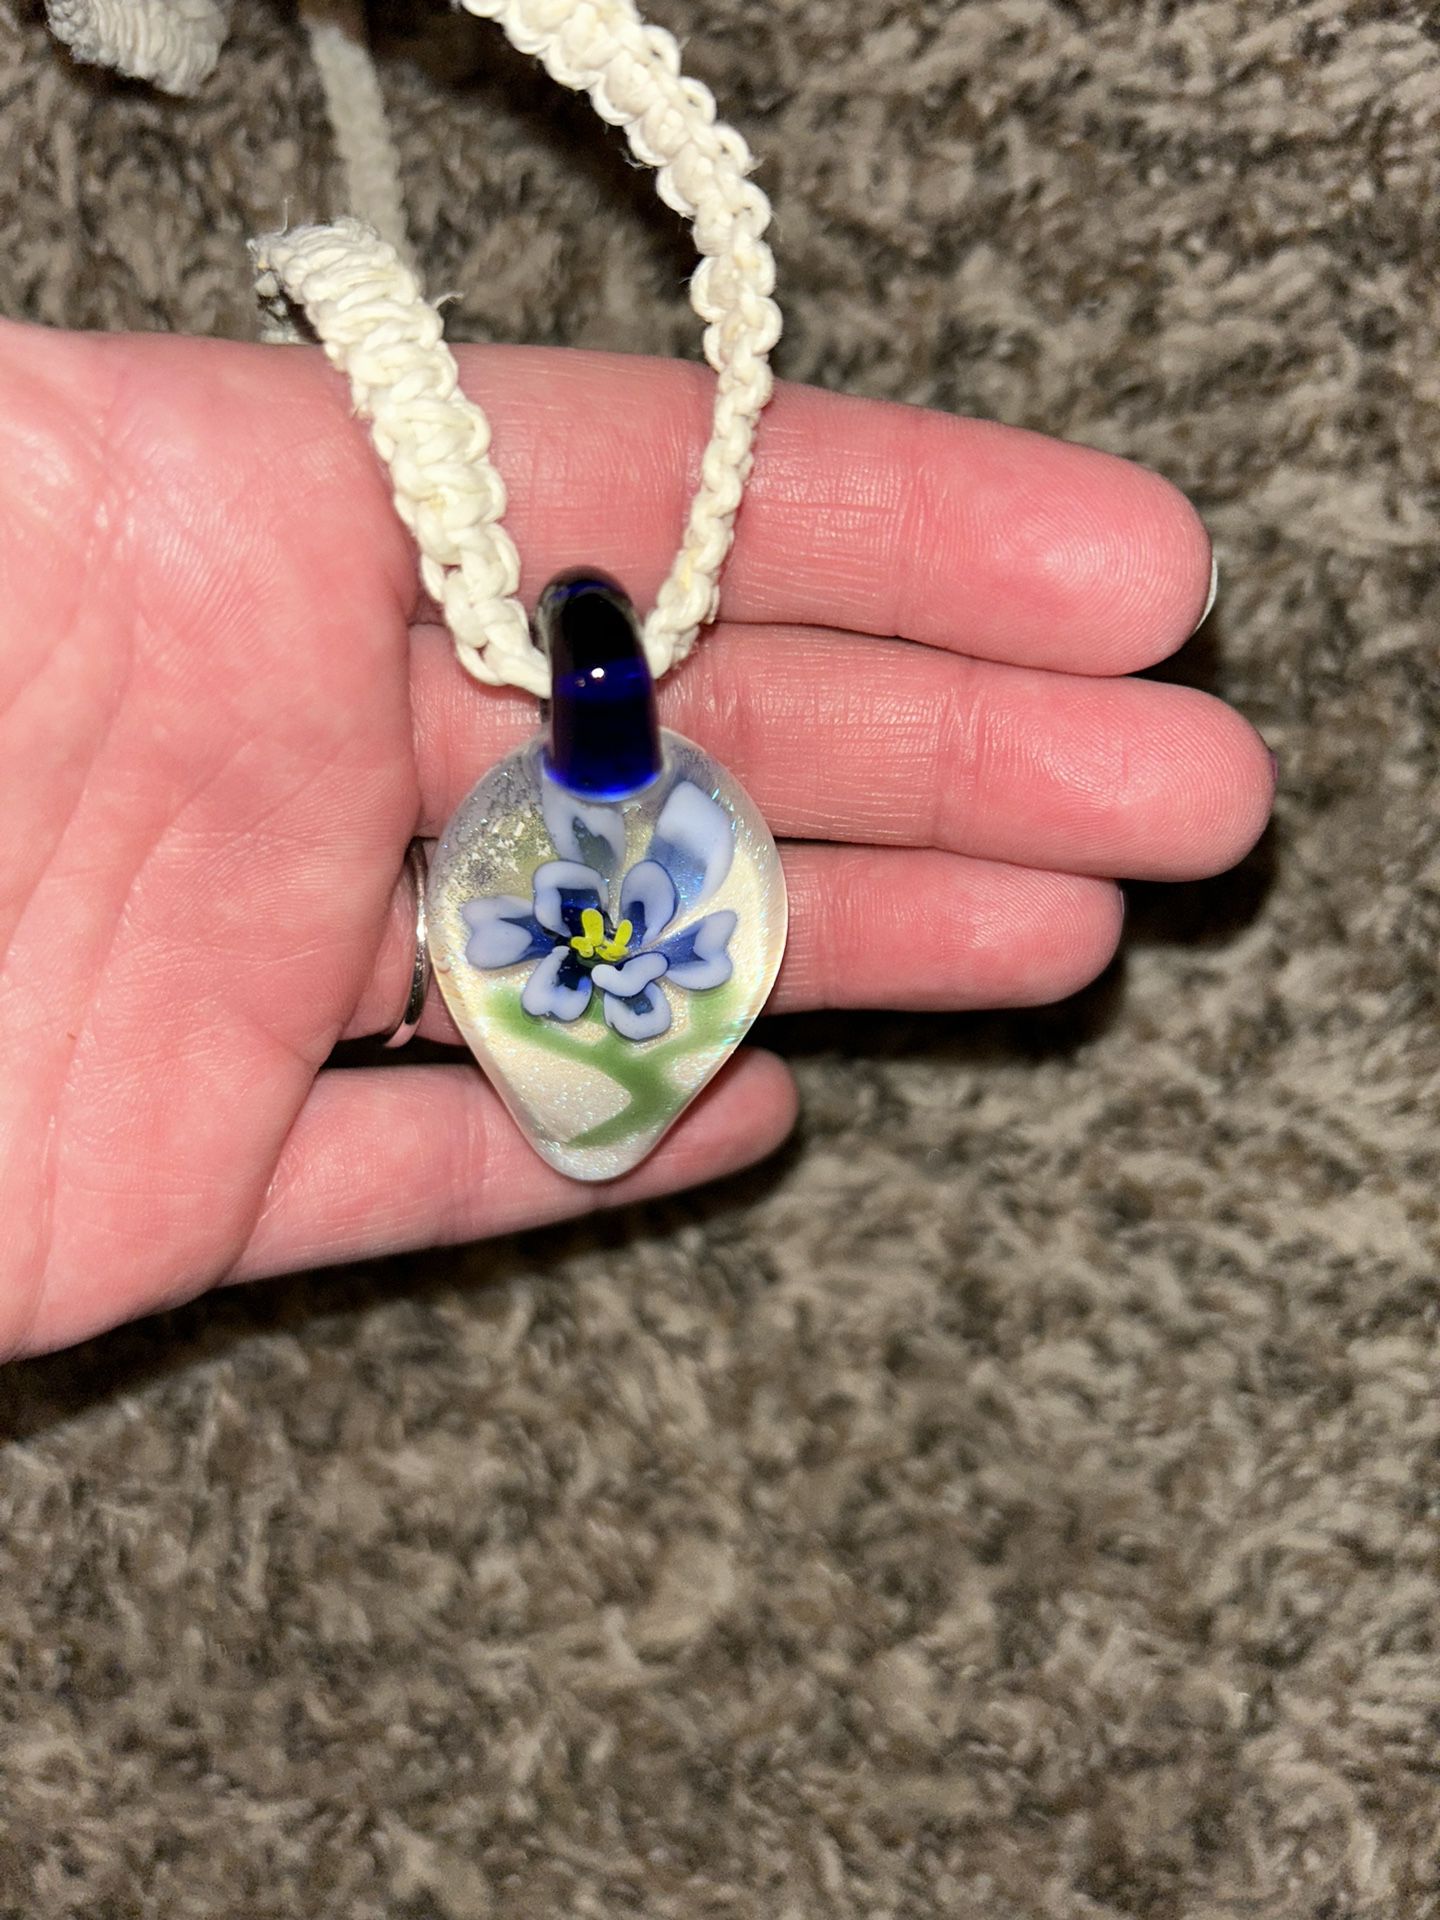 New, Goregous unworn blown glass flower necklace or charm 